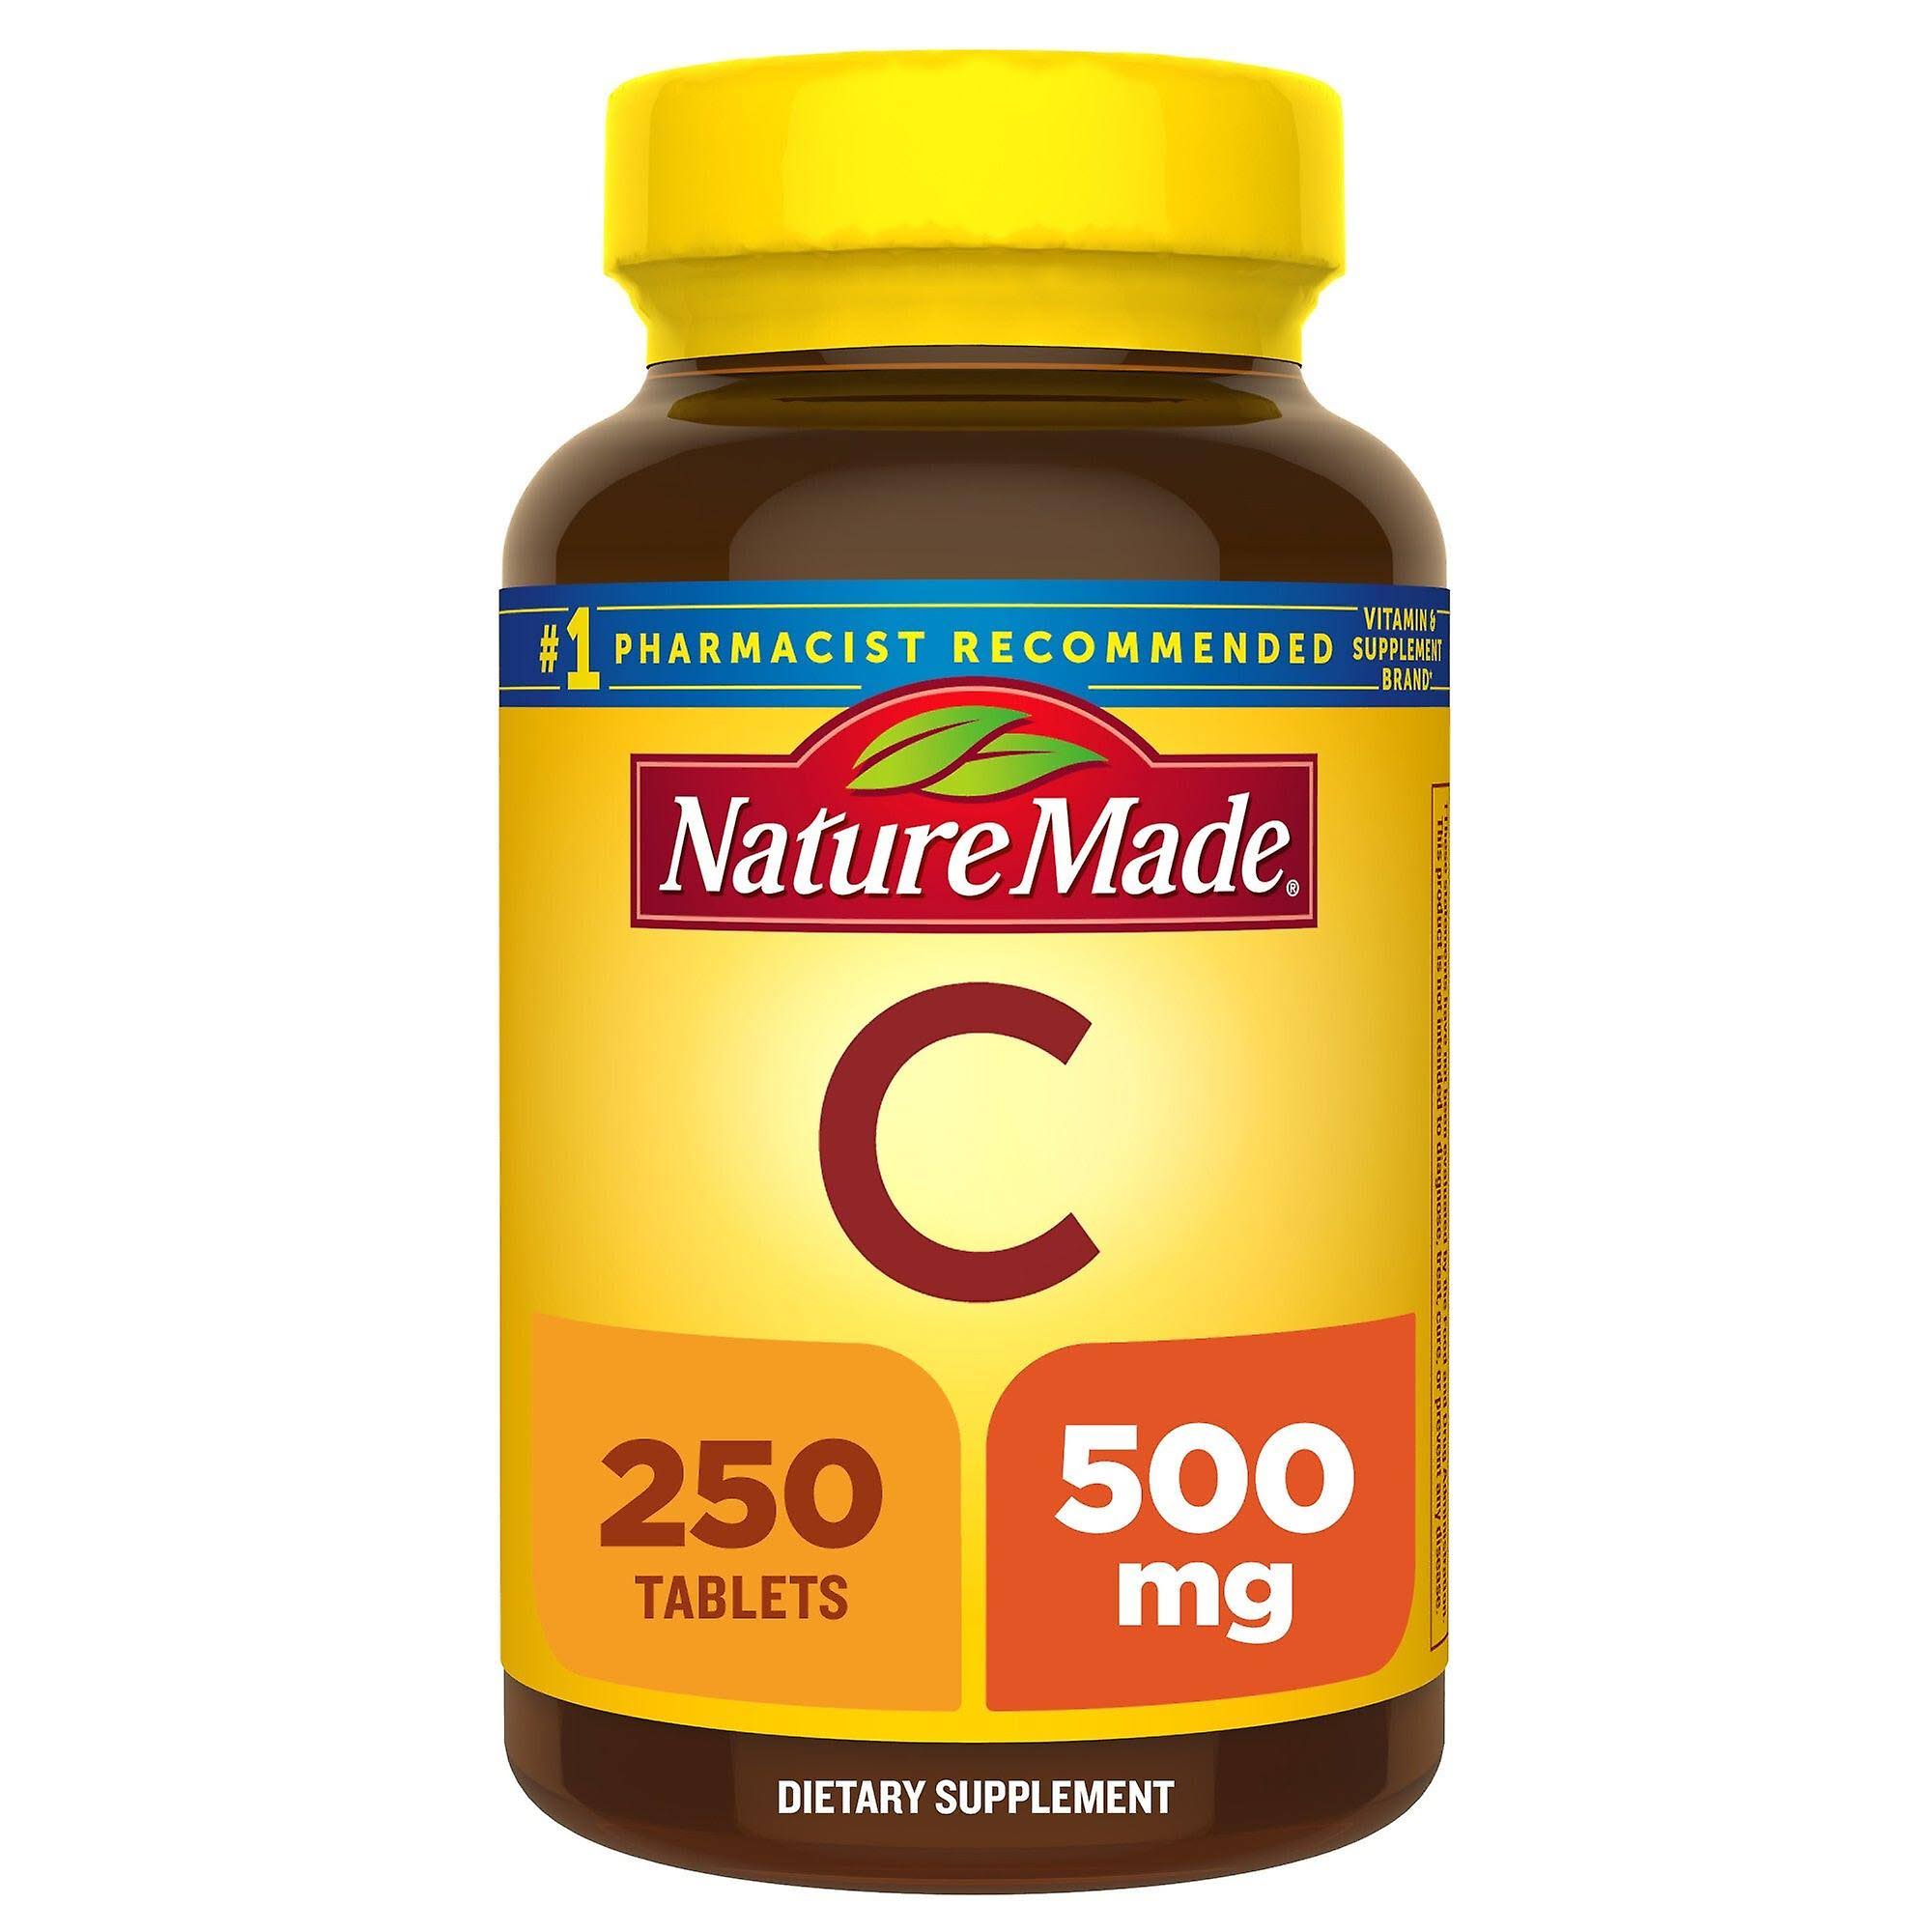 Nature Made Vitamin C - 500mg, 250 Caplets